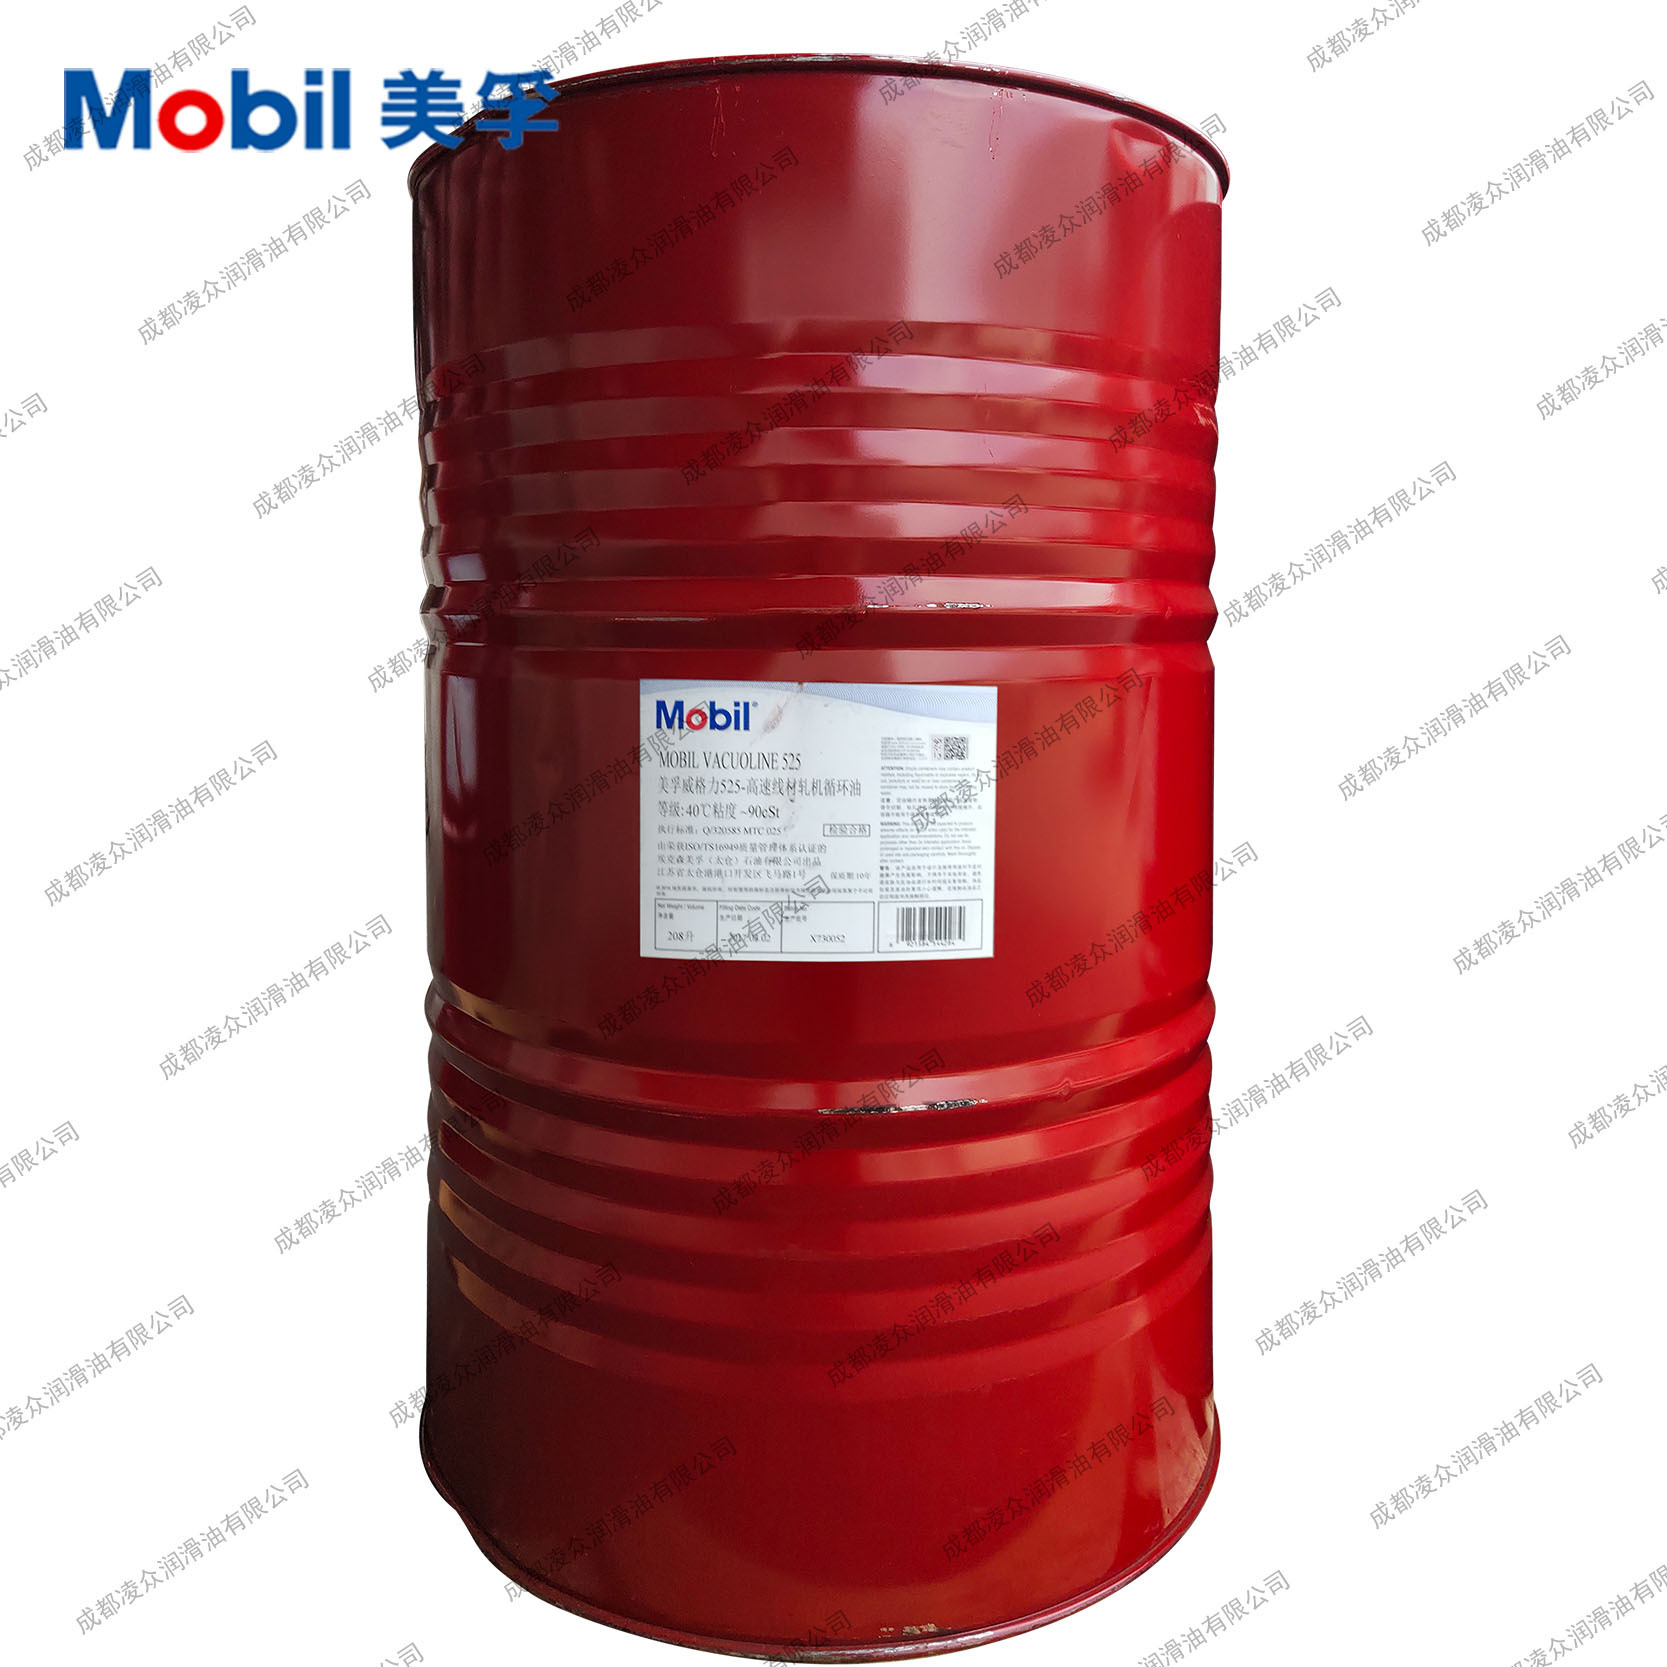 M|obil Vacuoline 美|孚威格力528 150号重型循环系统油